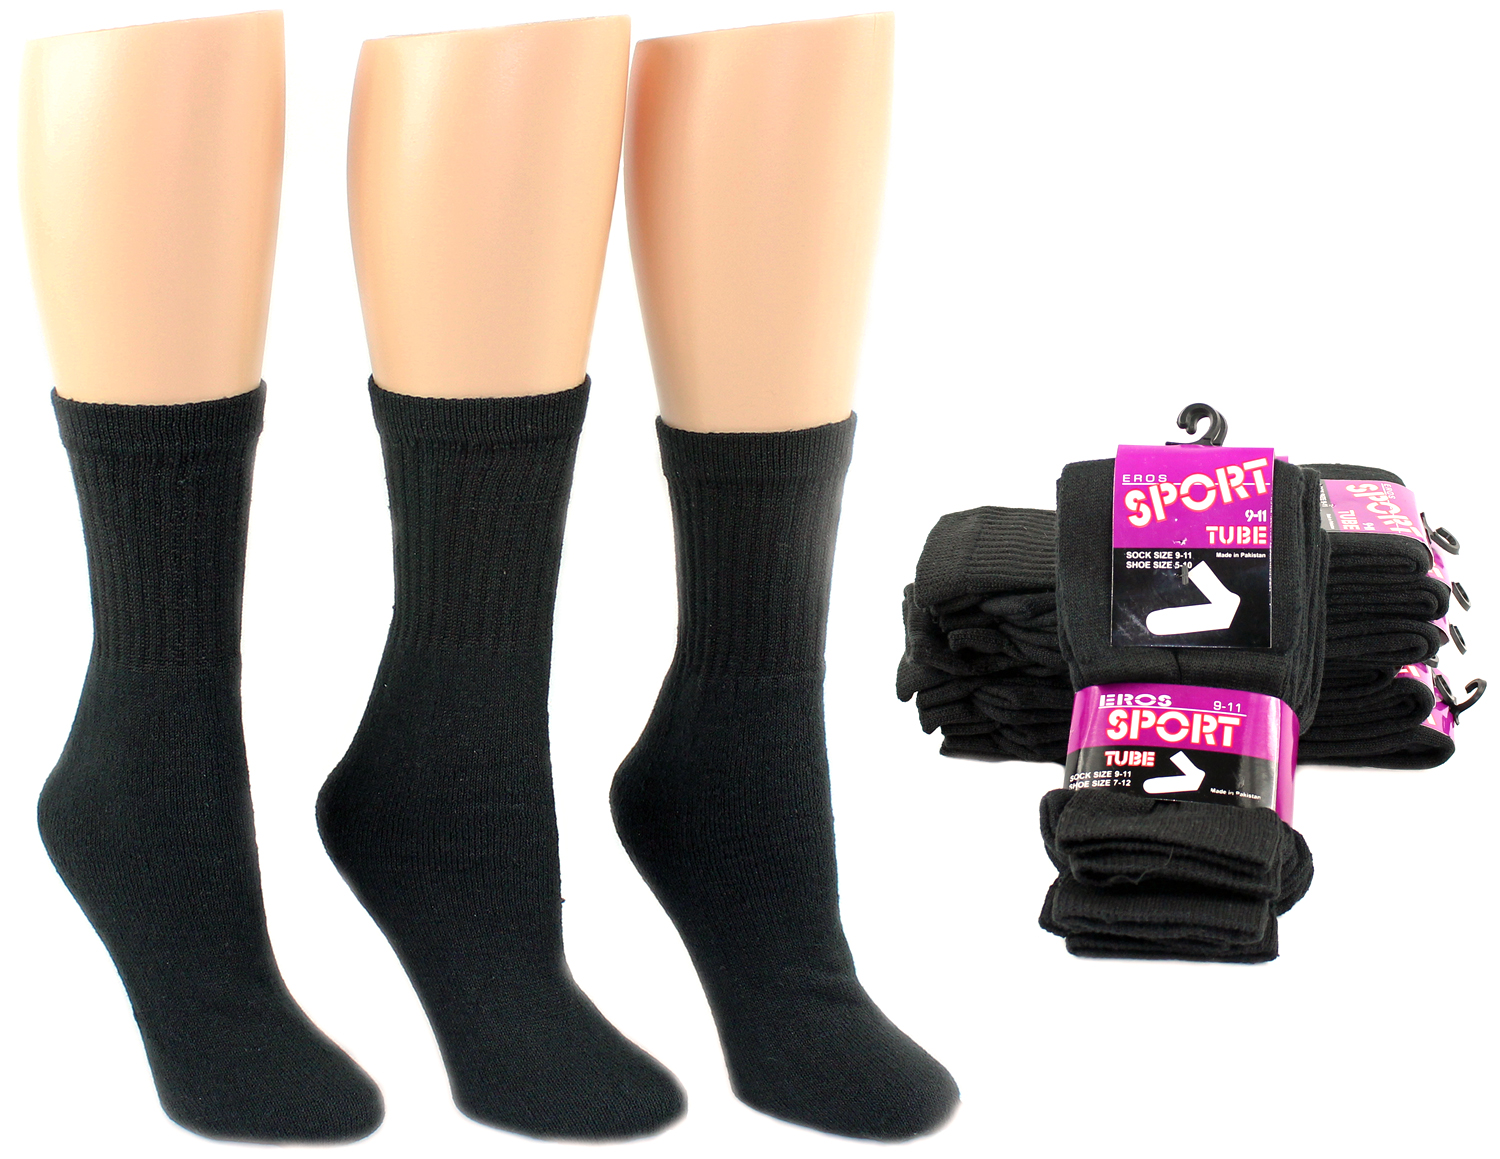 Women's Cotton Athletic Tube Socks - Black